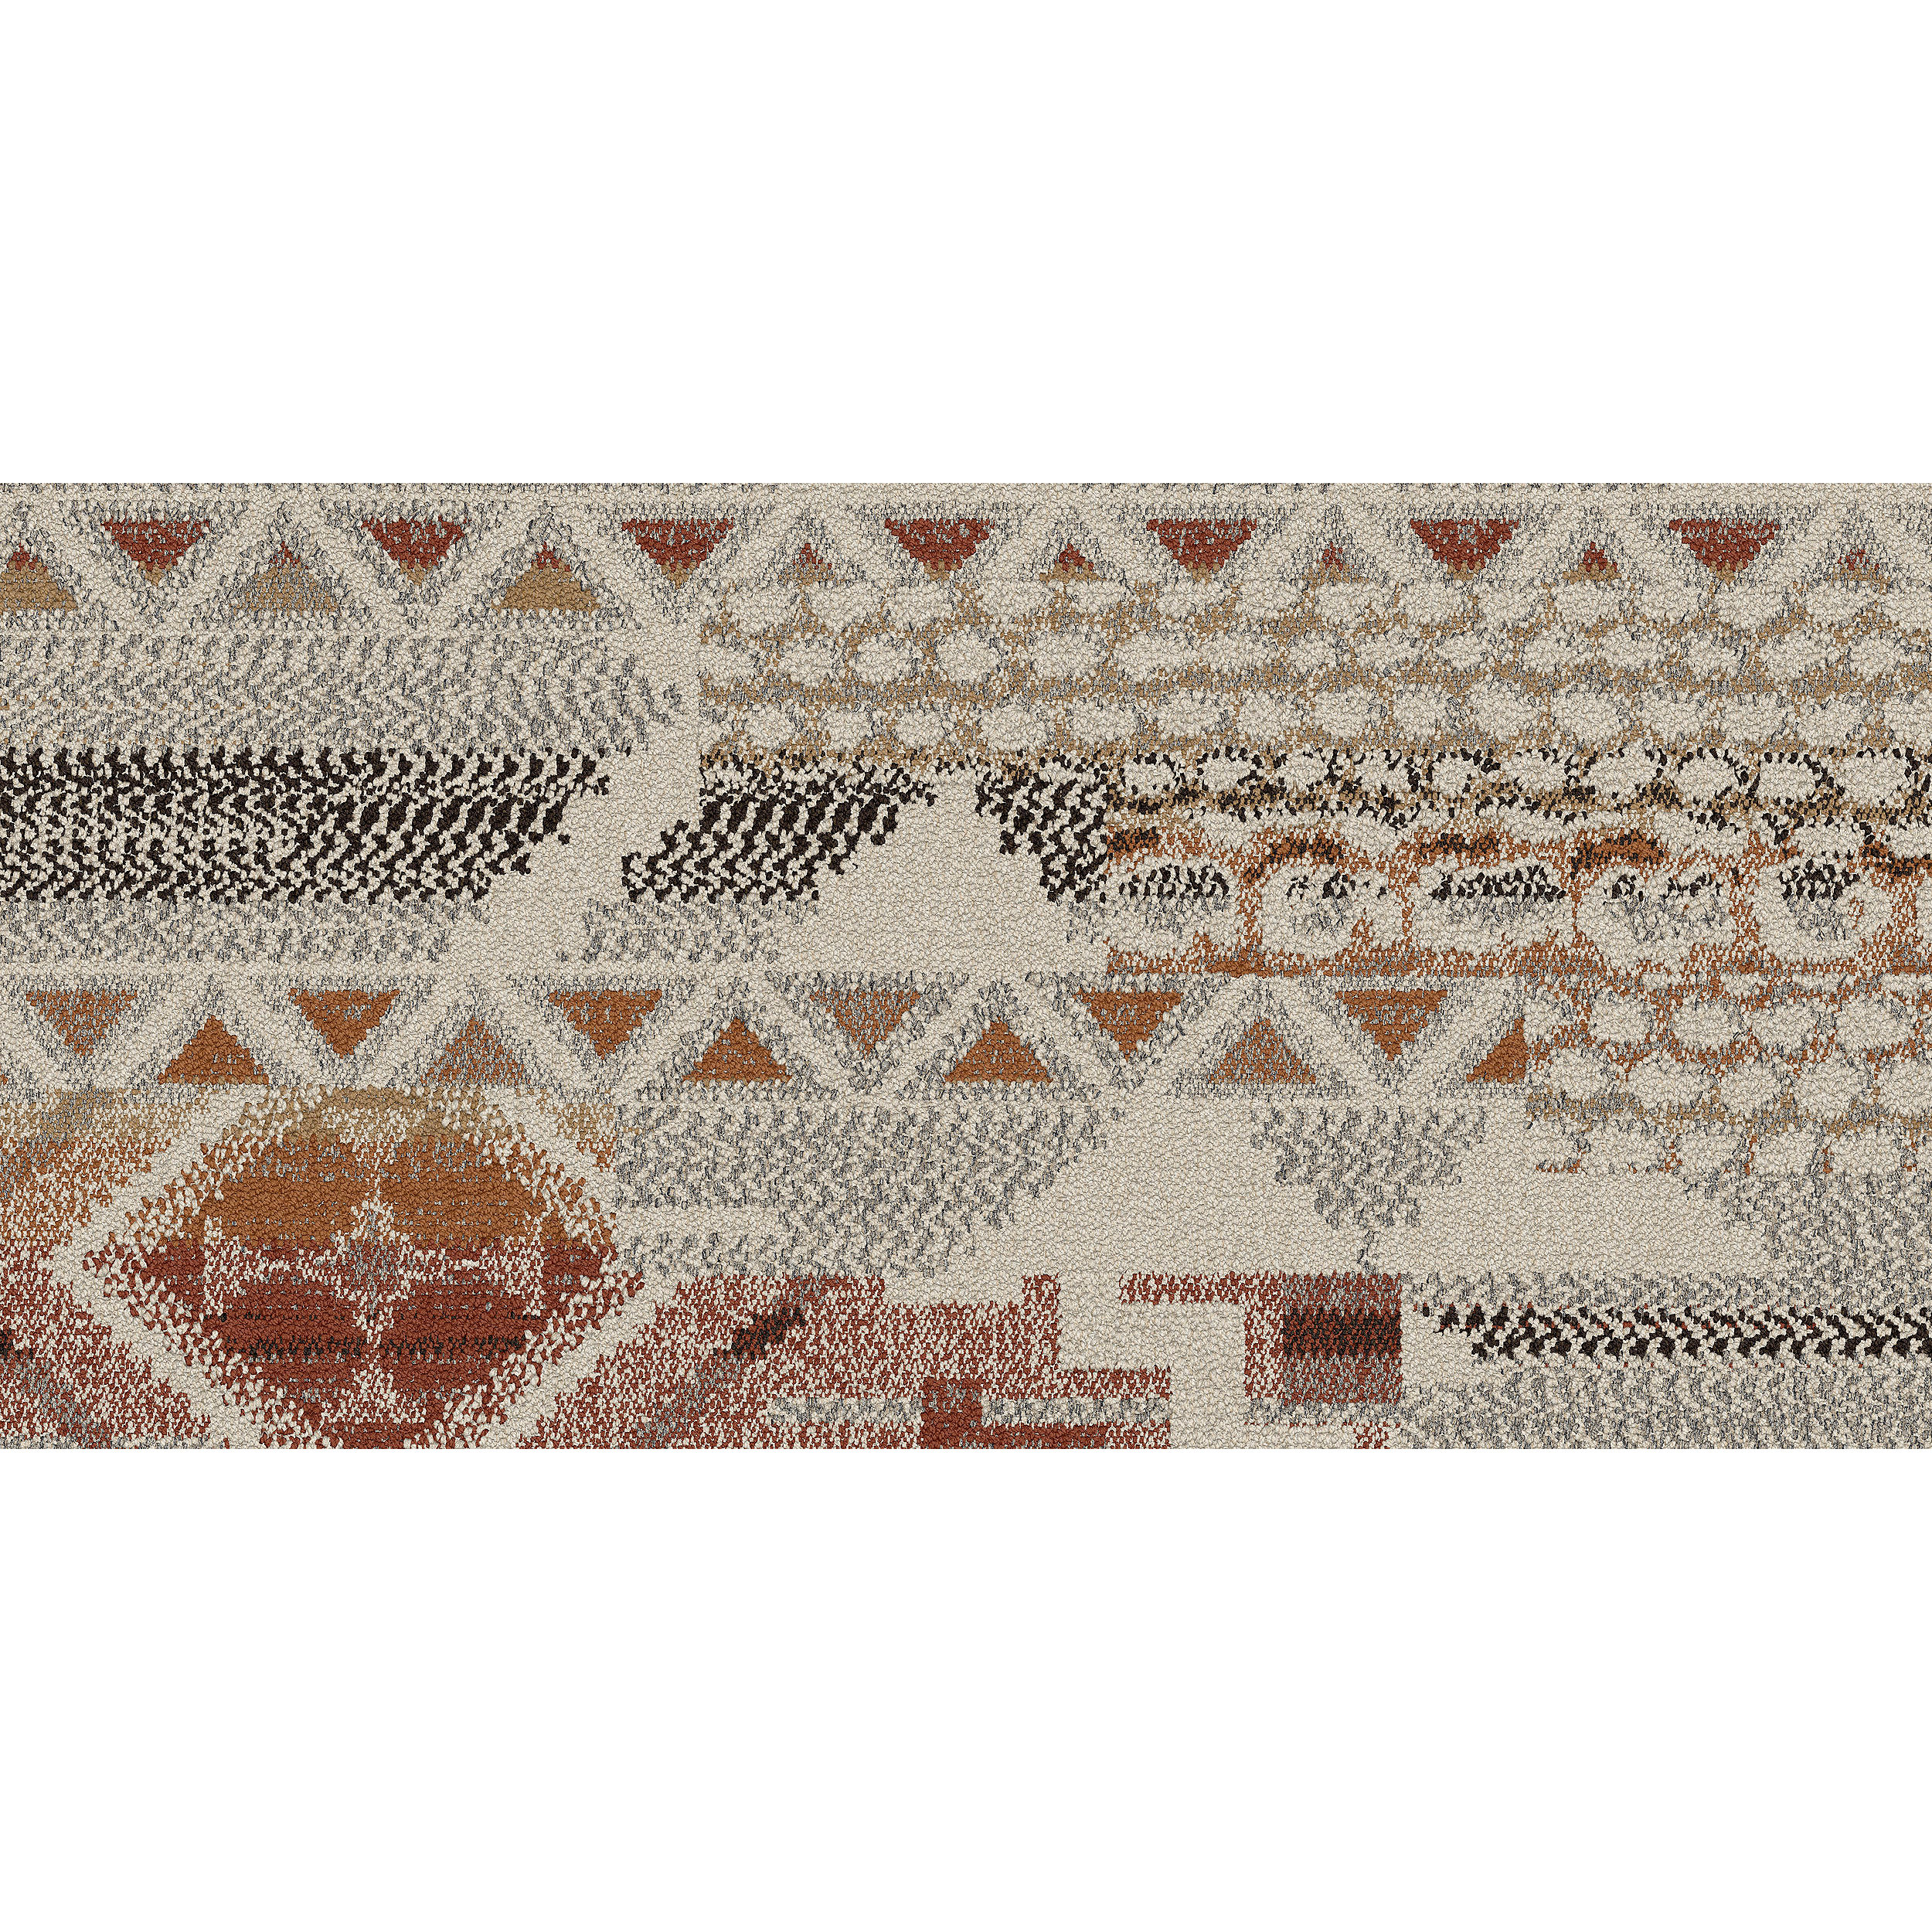 Desert Ranch Carpet Tile in Sunset image number 10